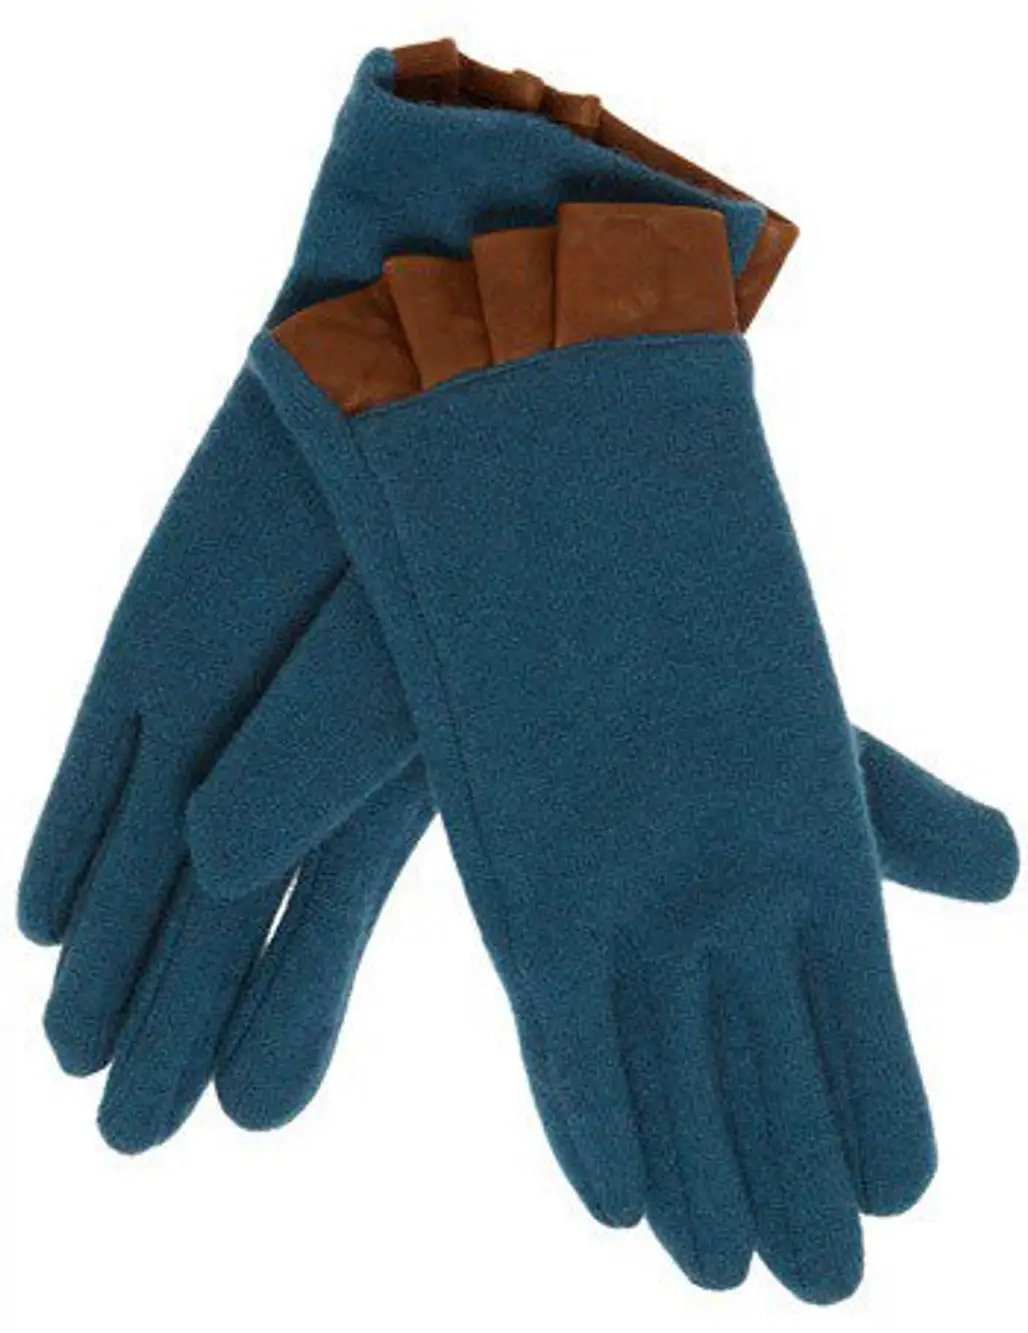 Teal City Gloves